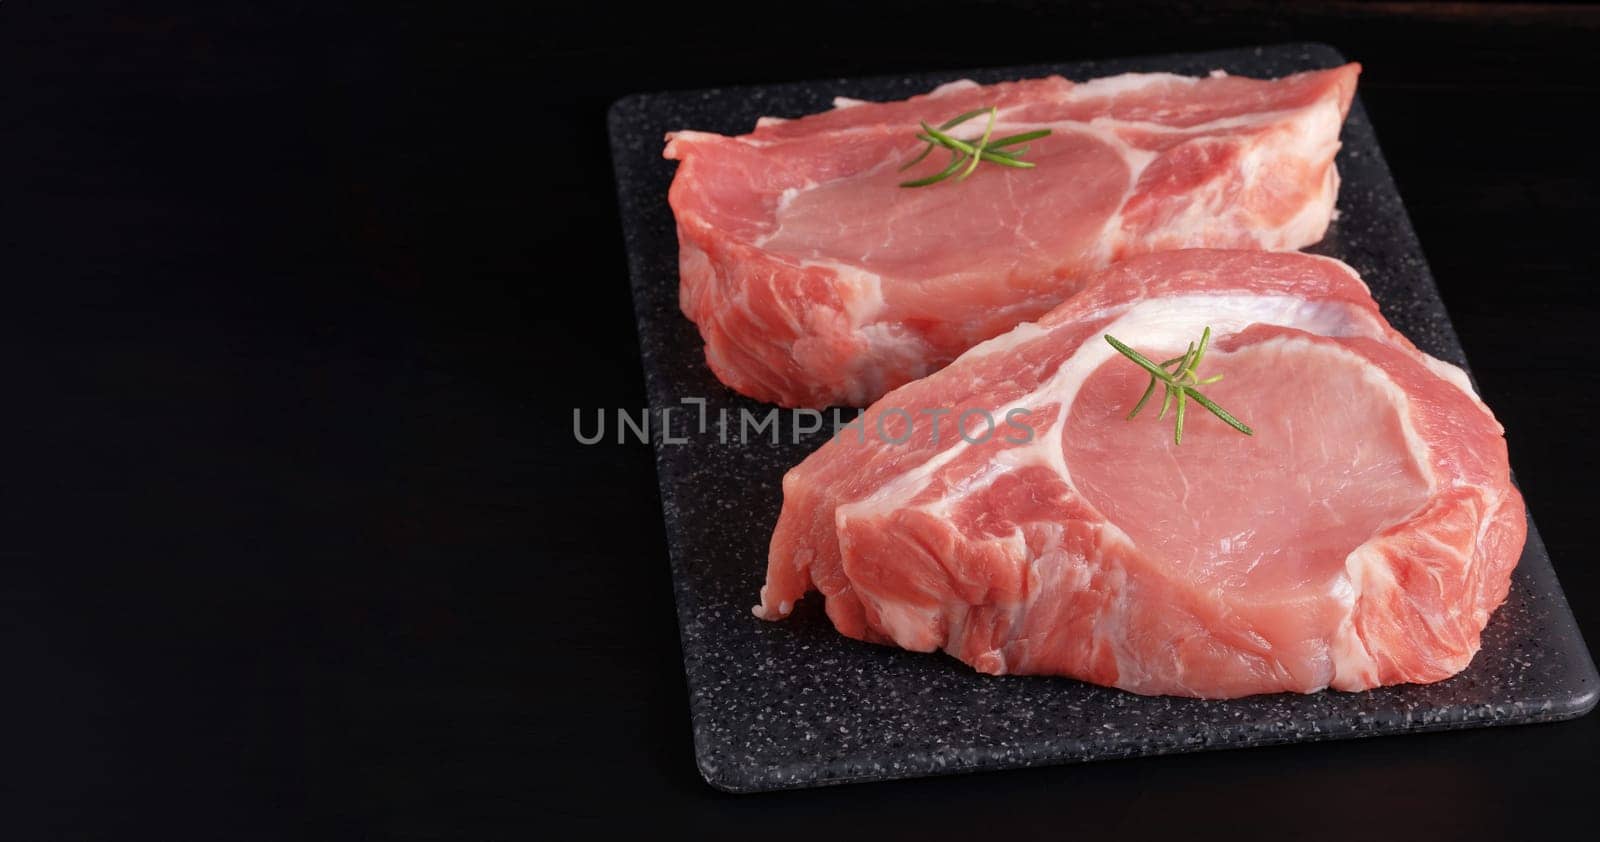 Raw pork steak with rosemary on a black table by NataliPopova